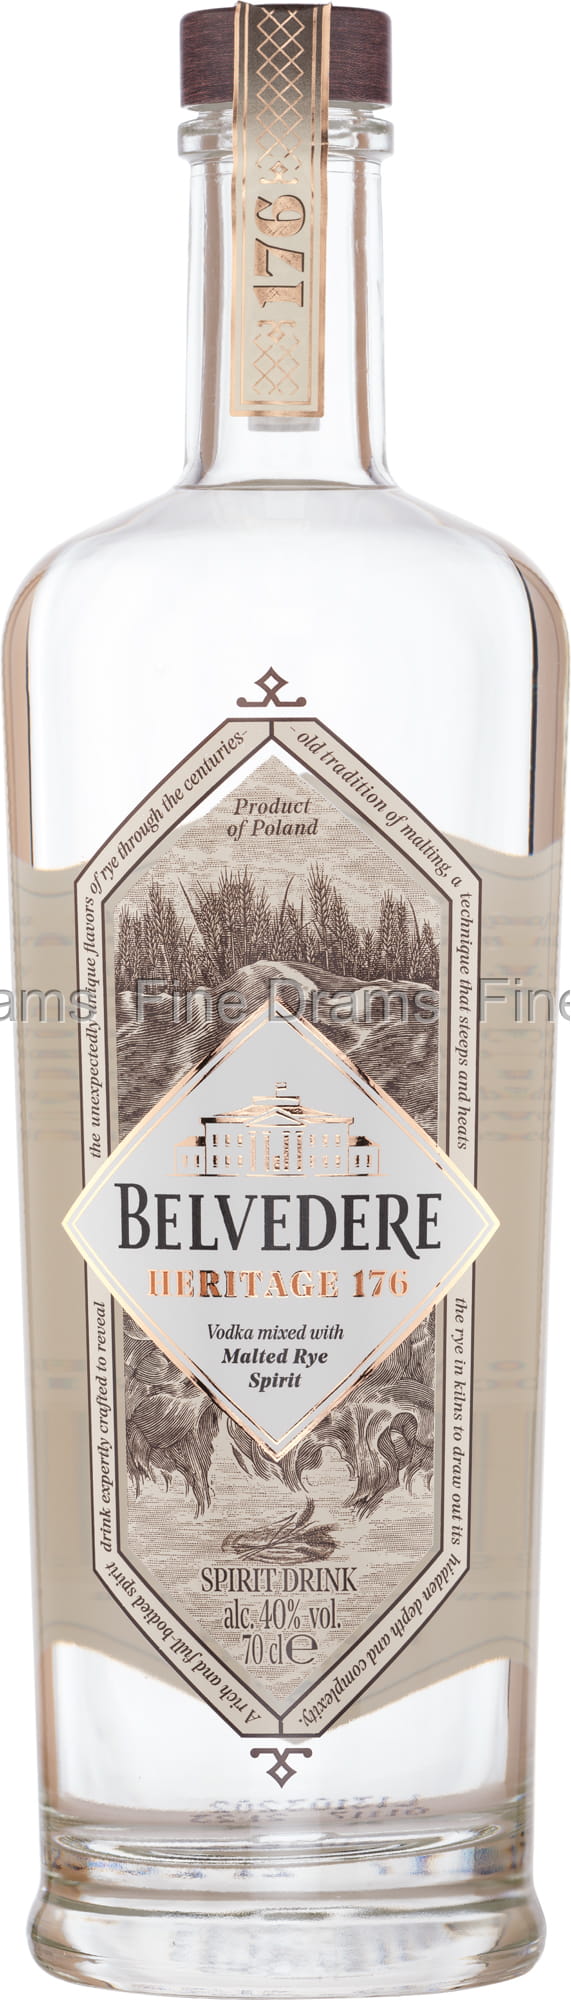 Belvedere Heritage 176 - 0,7 Liter - Vodka Haus